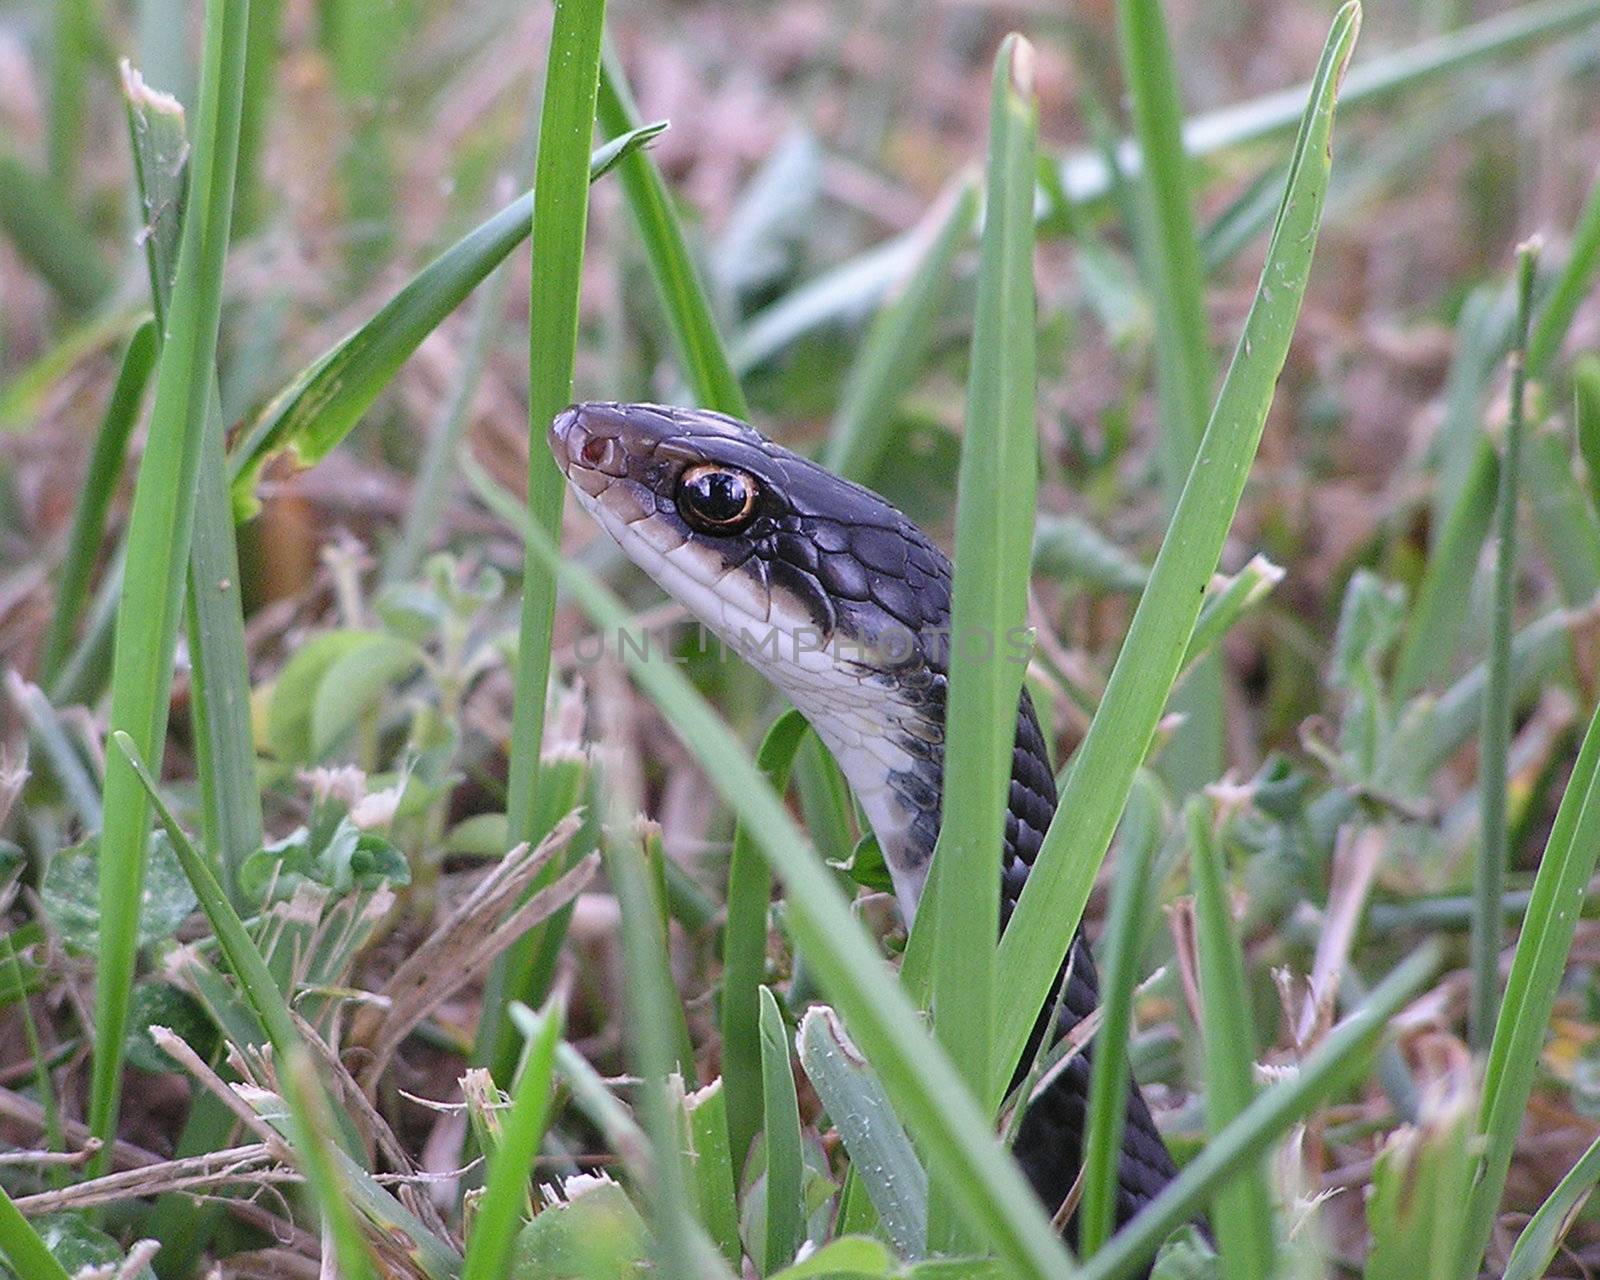 Florida Black Racer snake